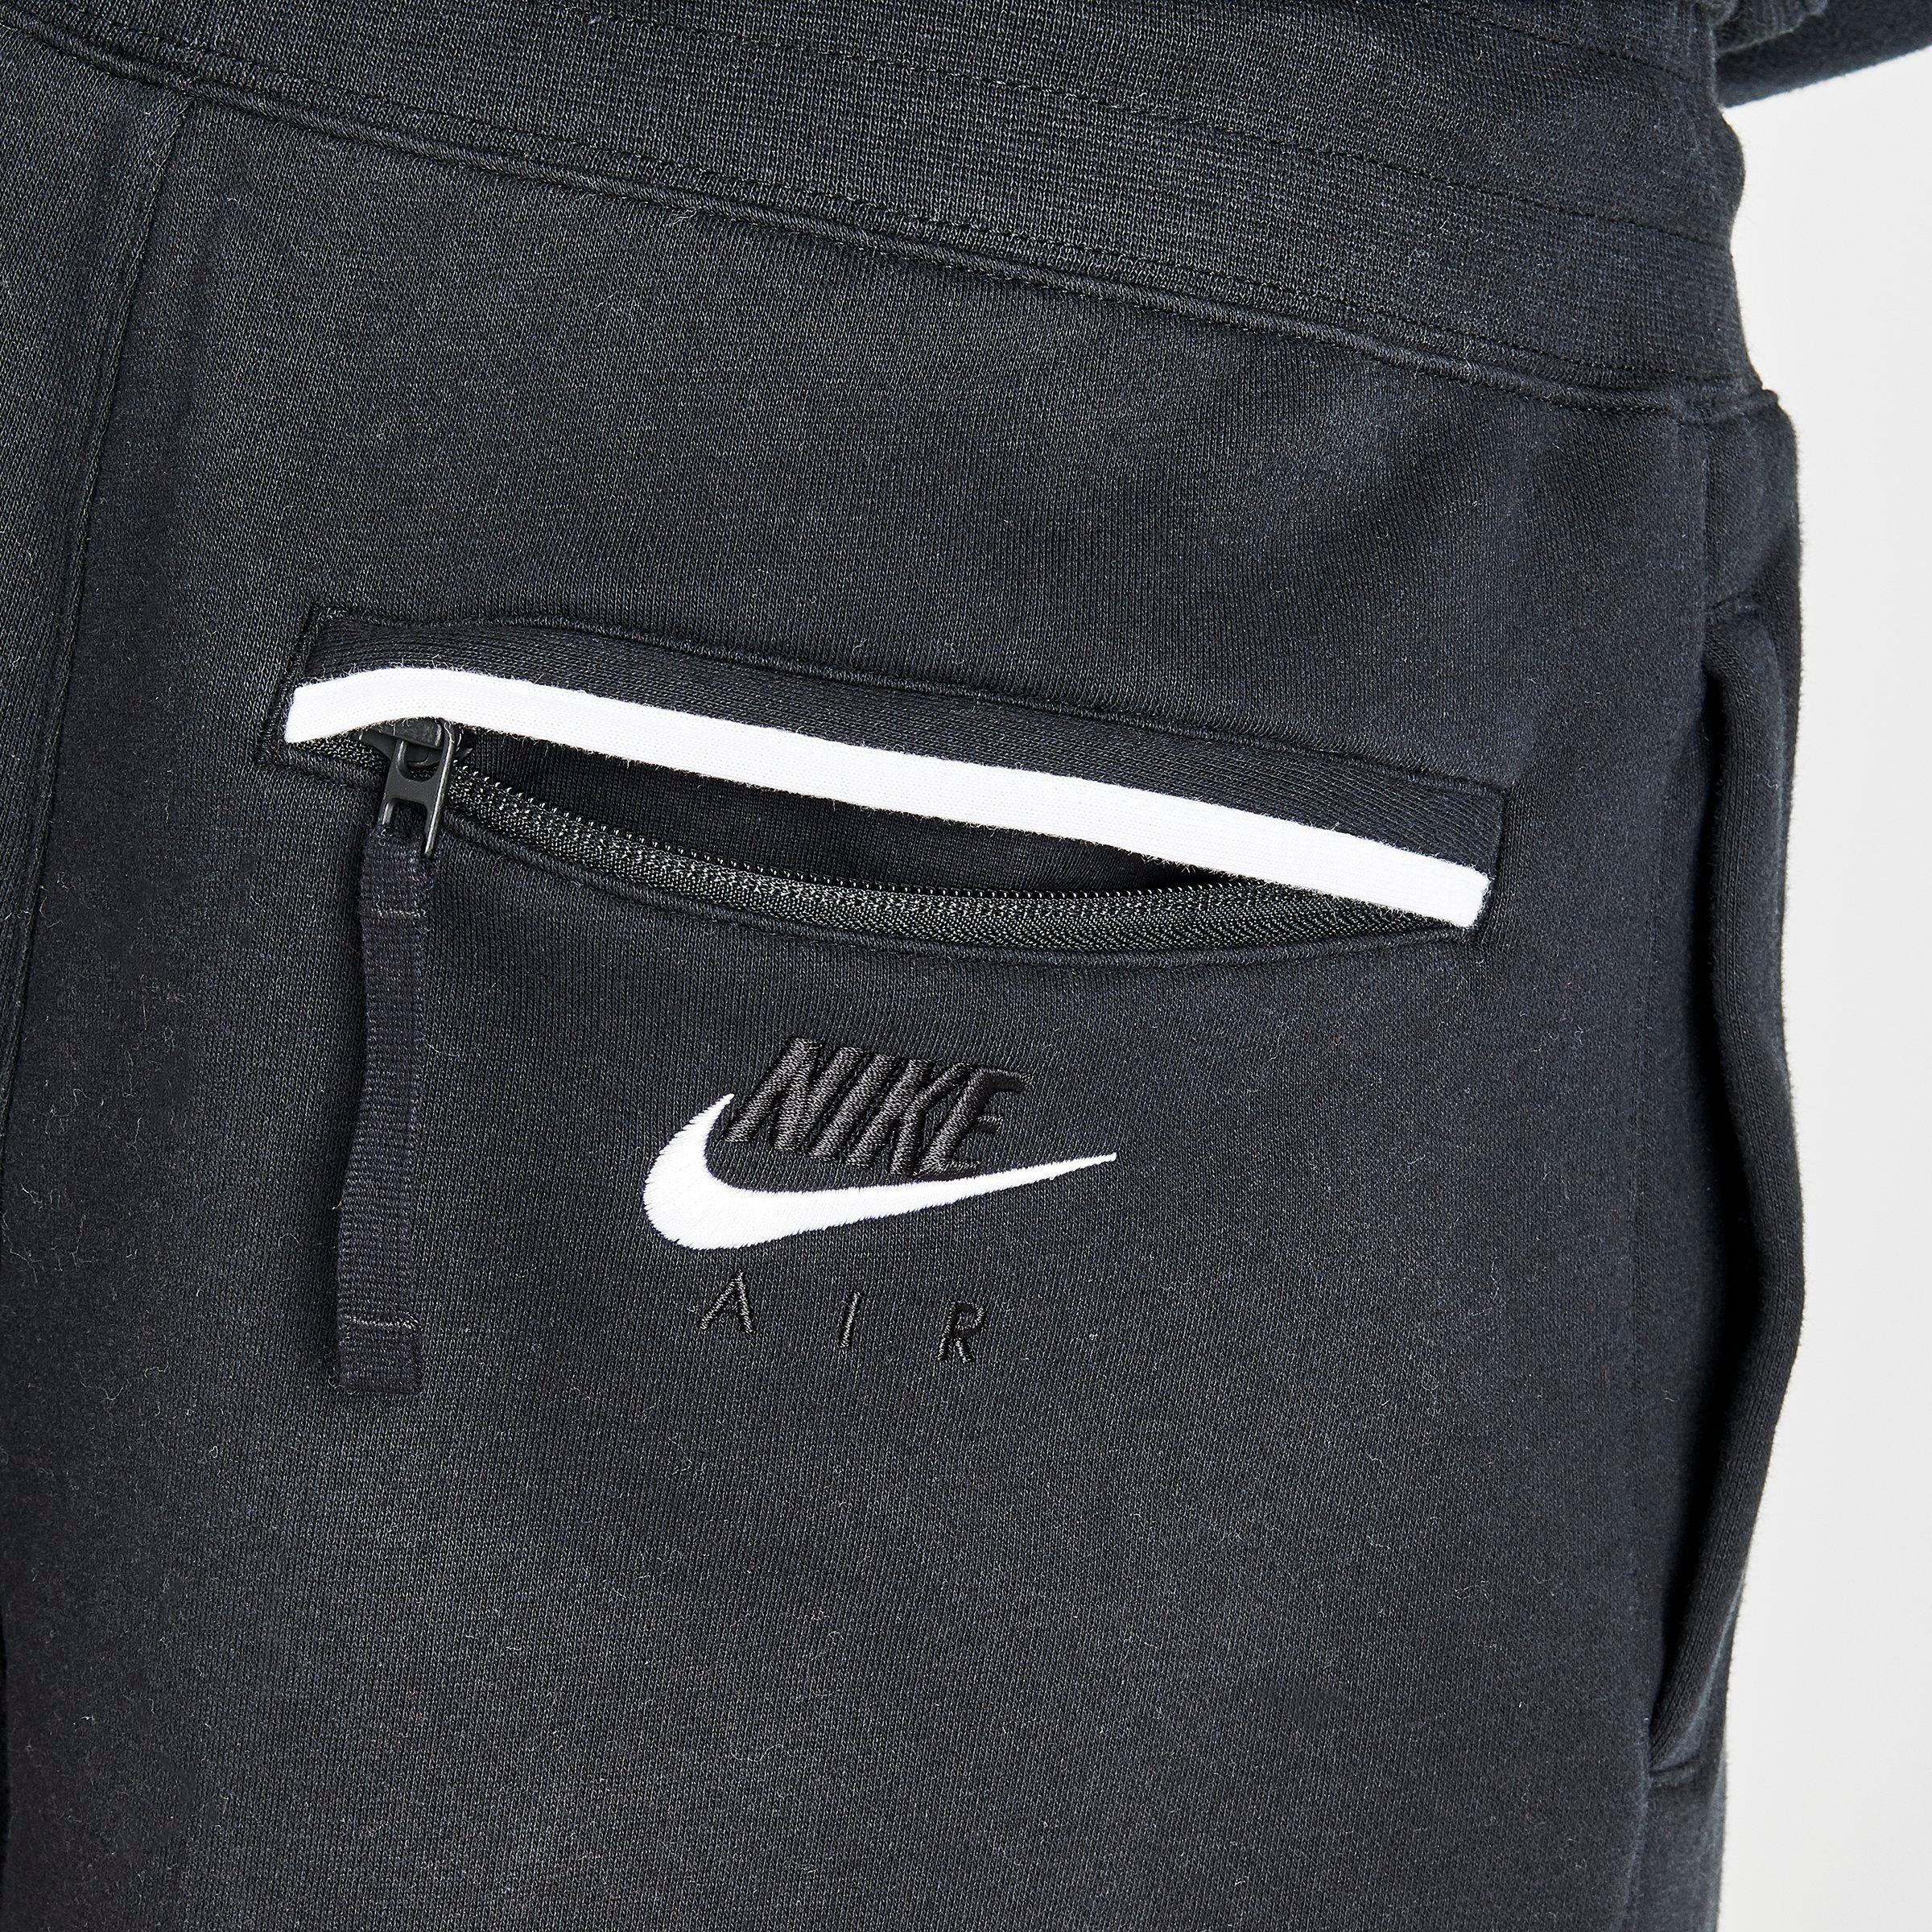 nike fleece shorts with zipper pockets